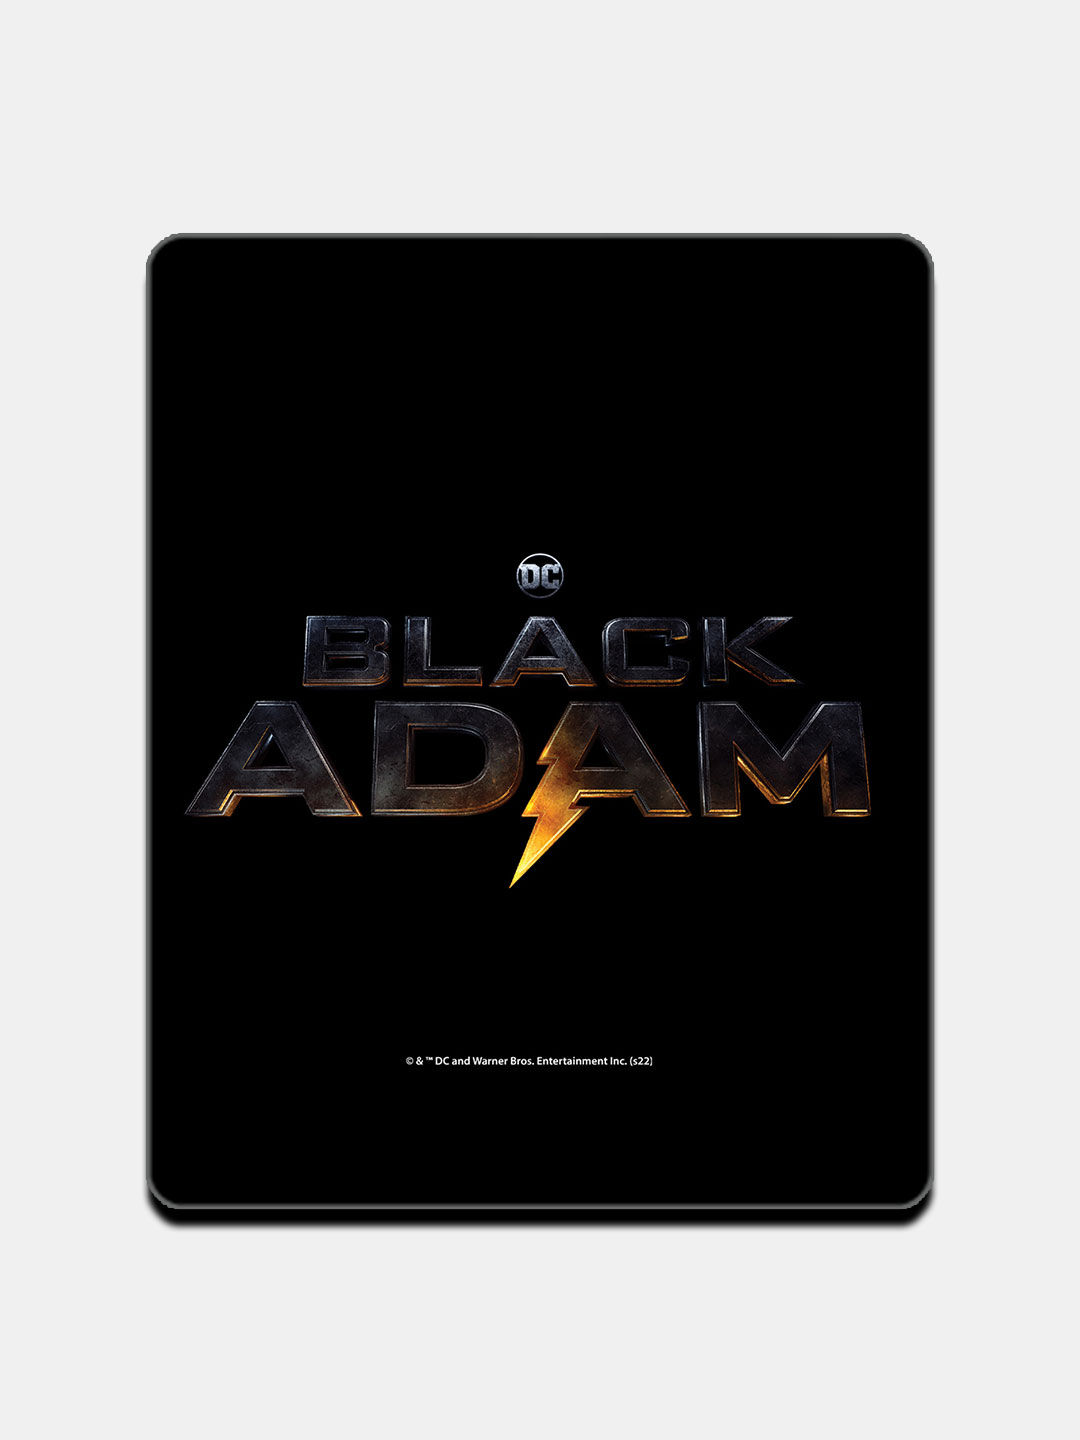 Buy Black Adam Title - Fridge Magnets Fridge Magnets Online